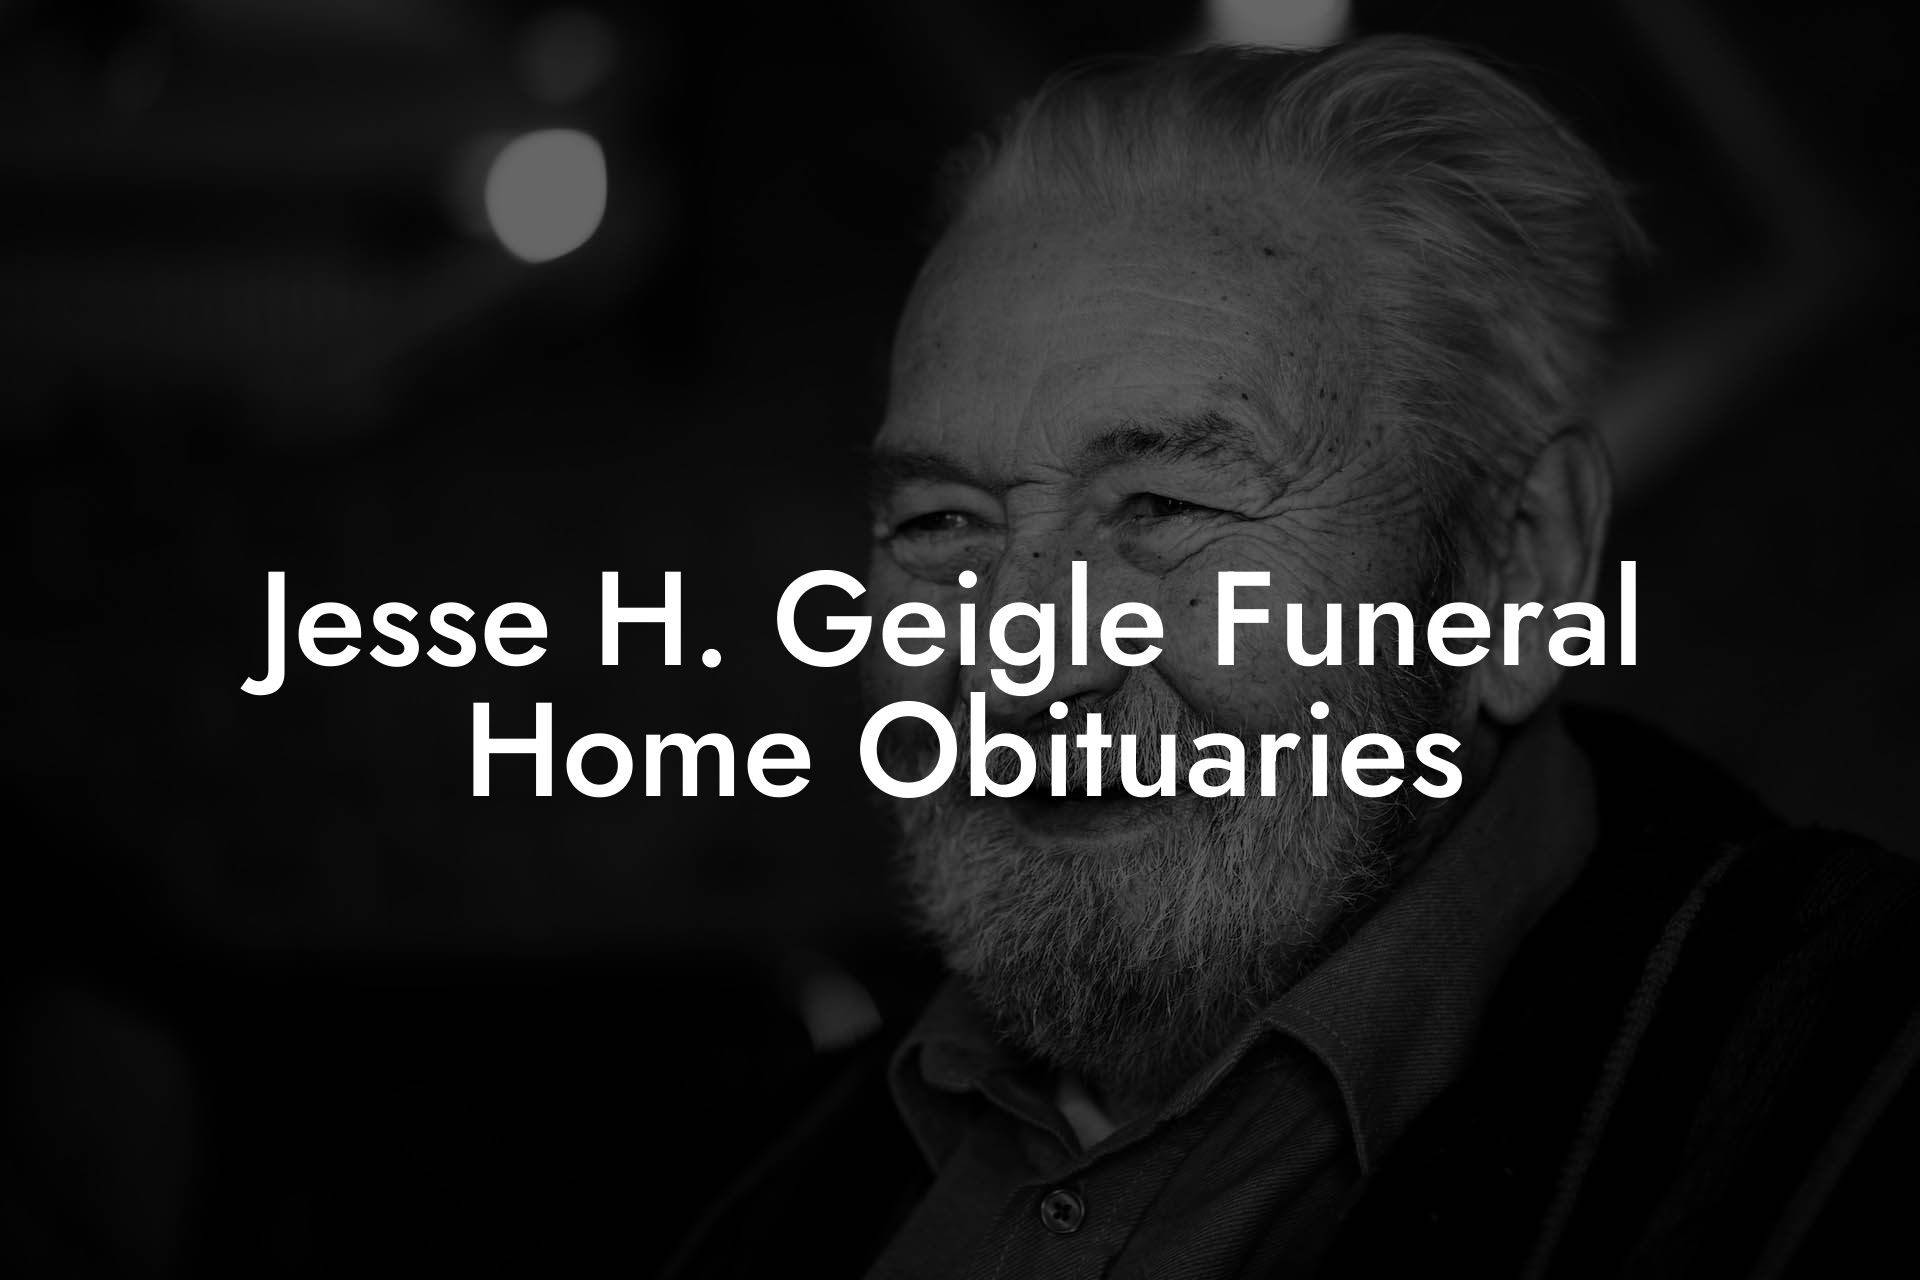 Jesse H. Geigle Funeral Home Obituaries